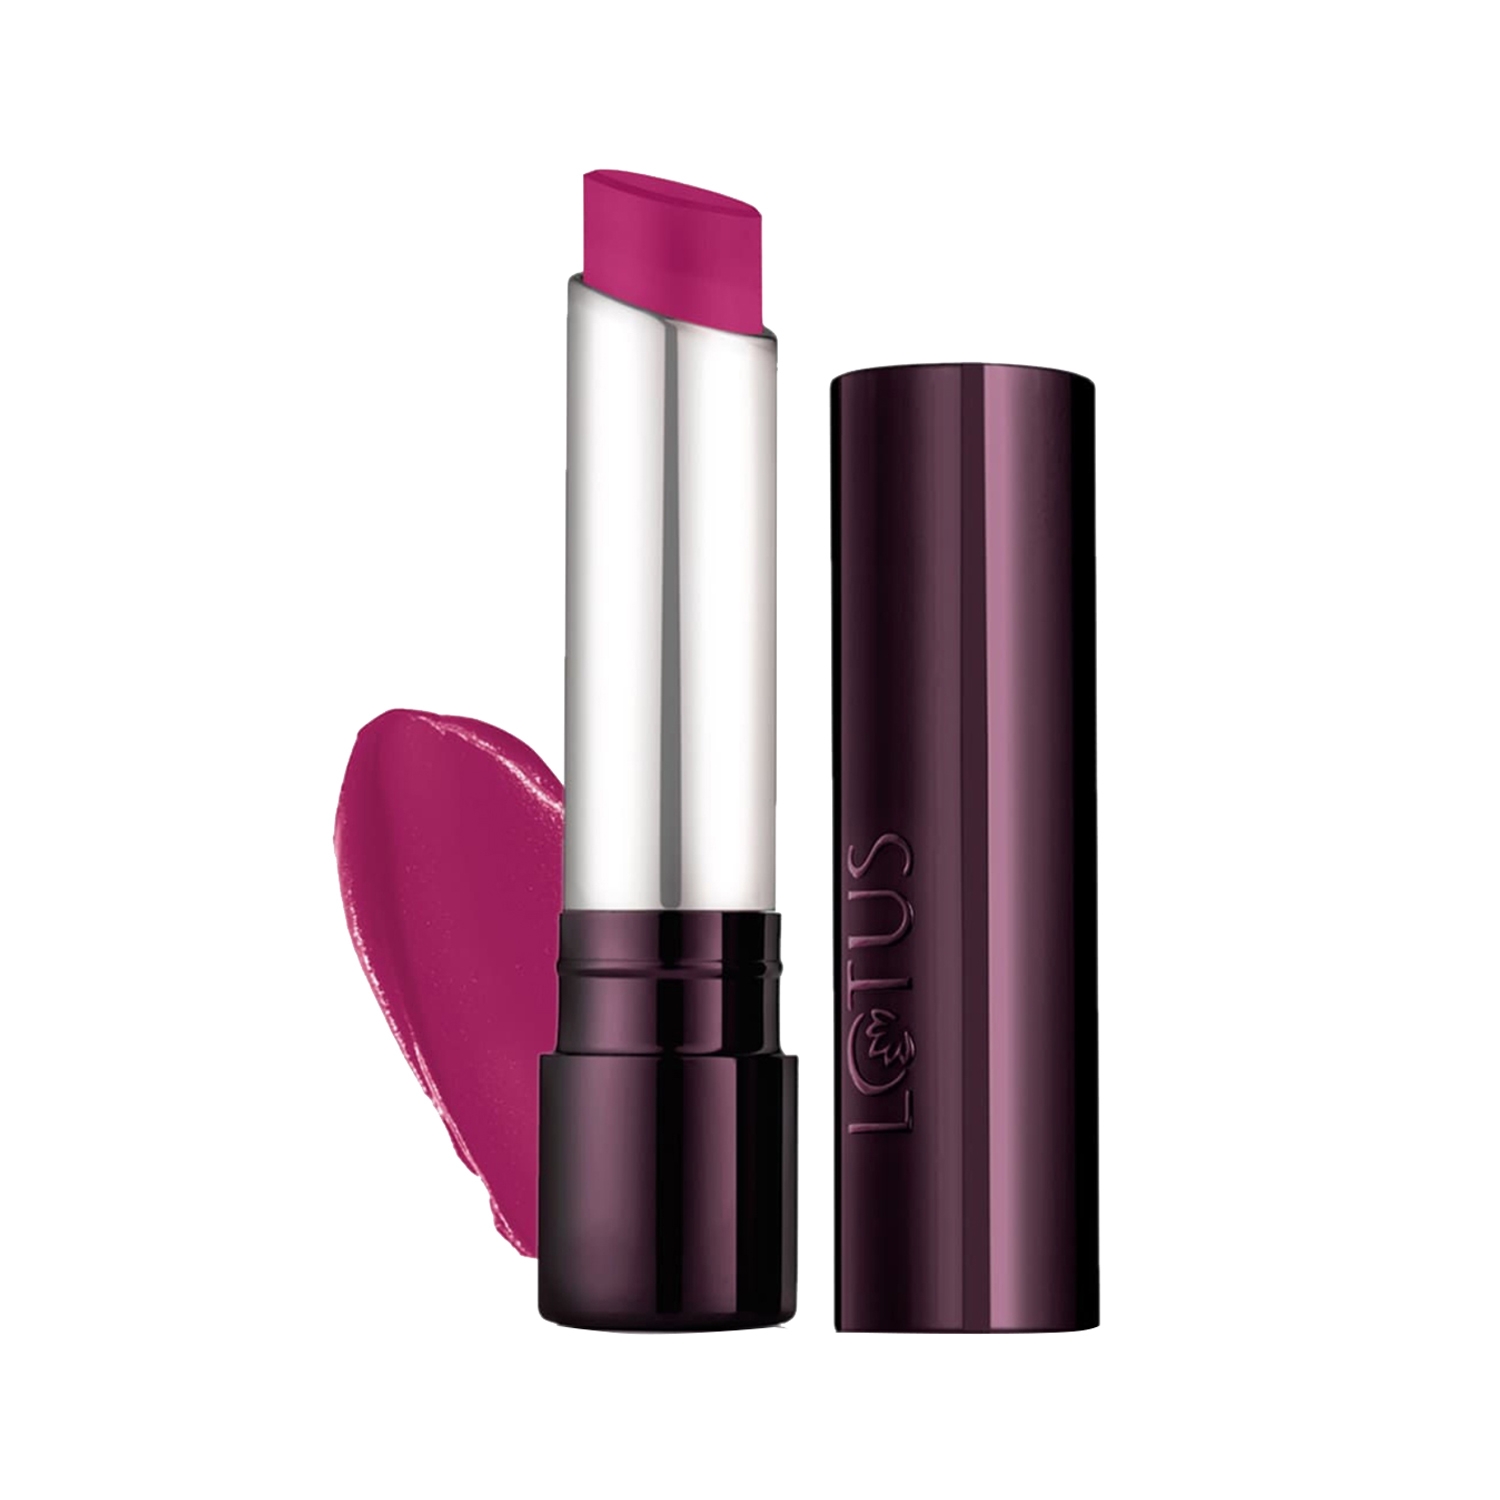 Lotus | Lotus Makeup Proedit Silk Touch Gel Lip Color - SG03 Pink Passion (4.2g)